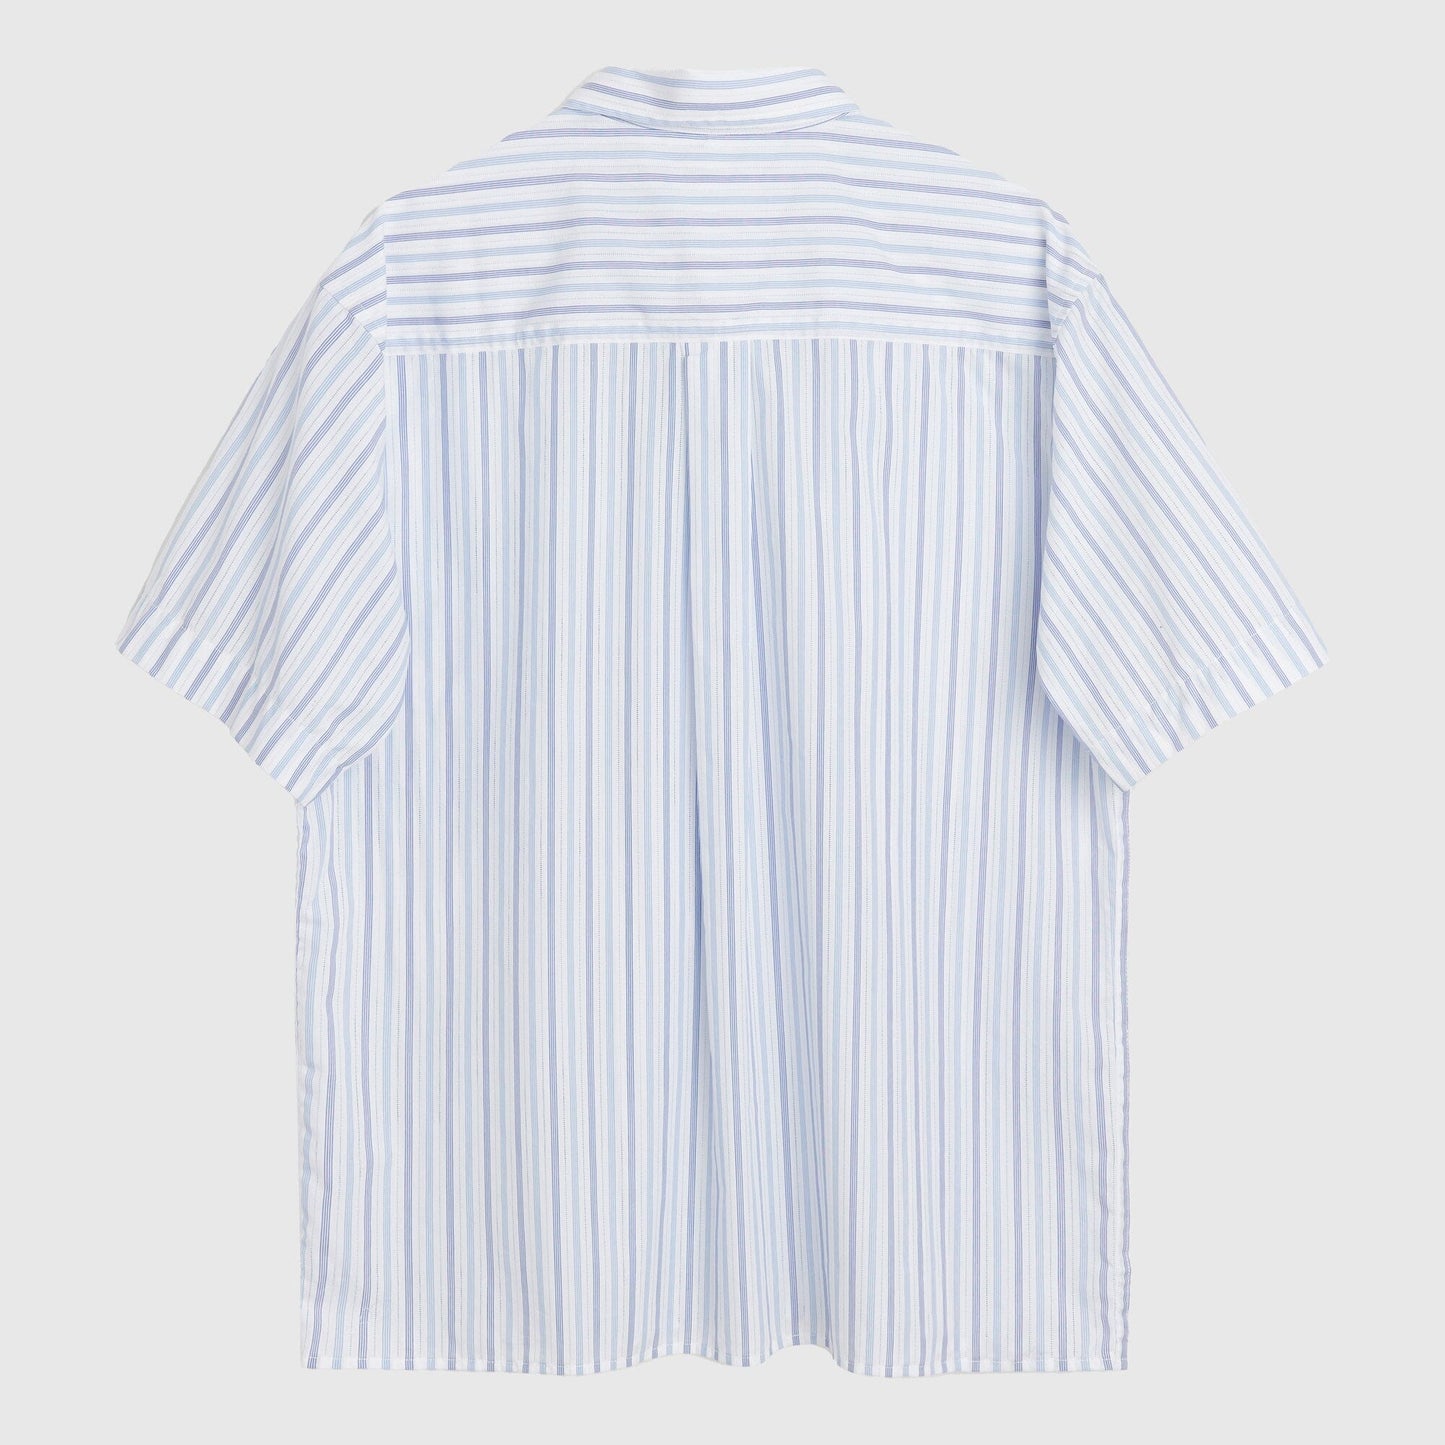 Soulland Jodie Shirt - White /Blue Shirt Soulland 